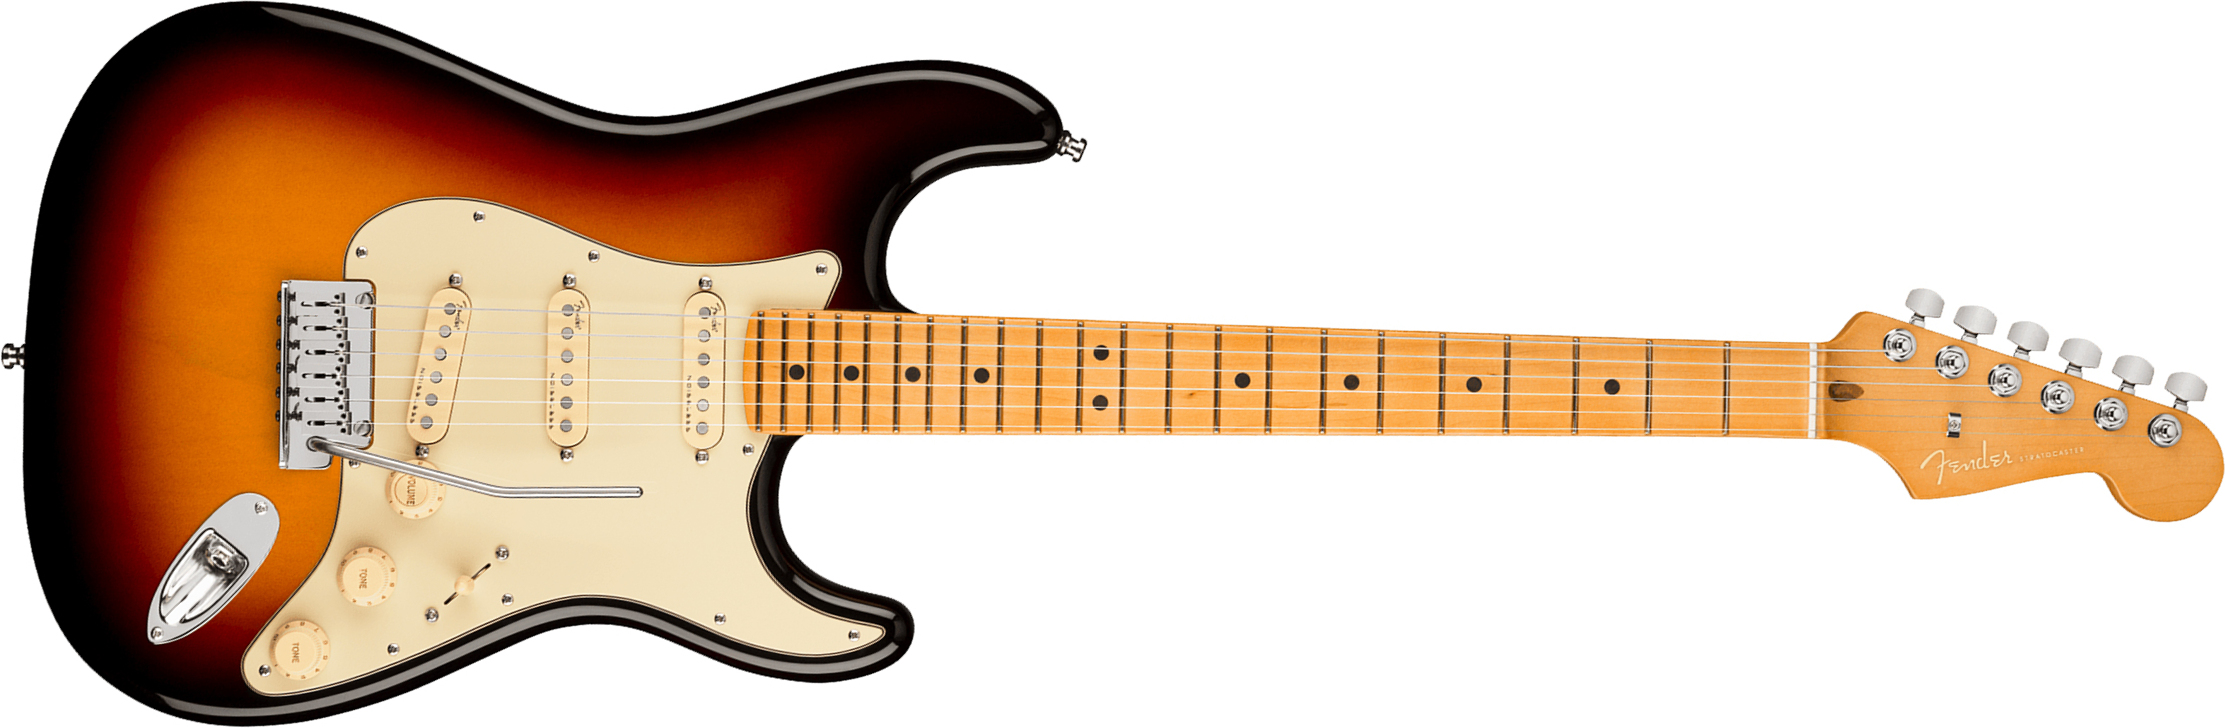 Fender Strat American Ultra 2019 Usa Mn - Ultraburst - Guitarra eléctrica con forma de str. - Main picture